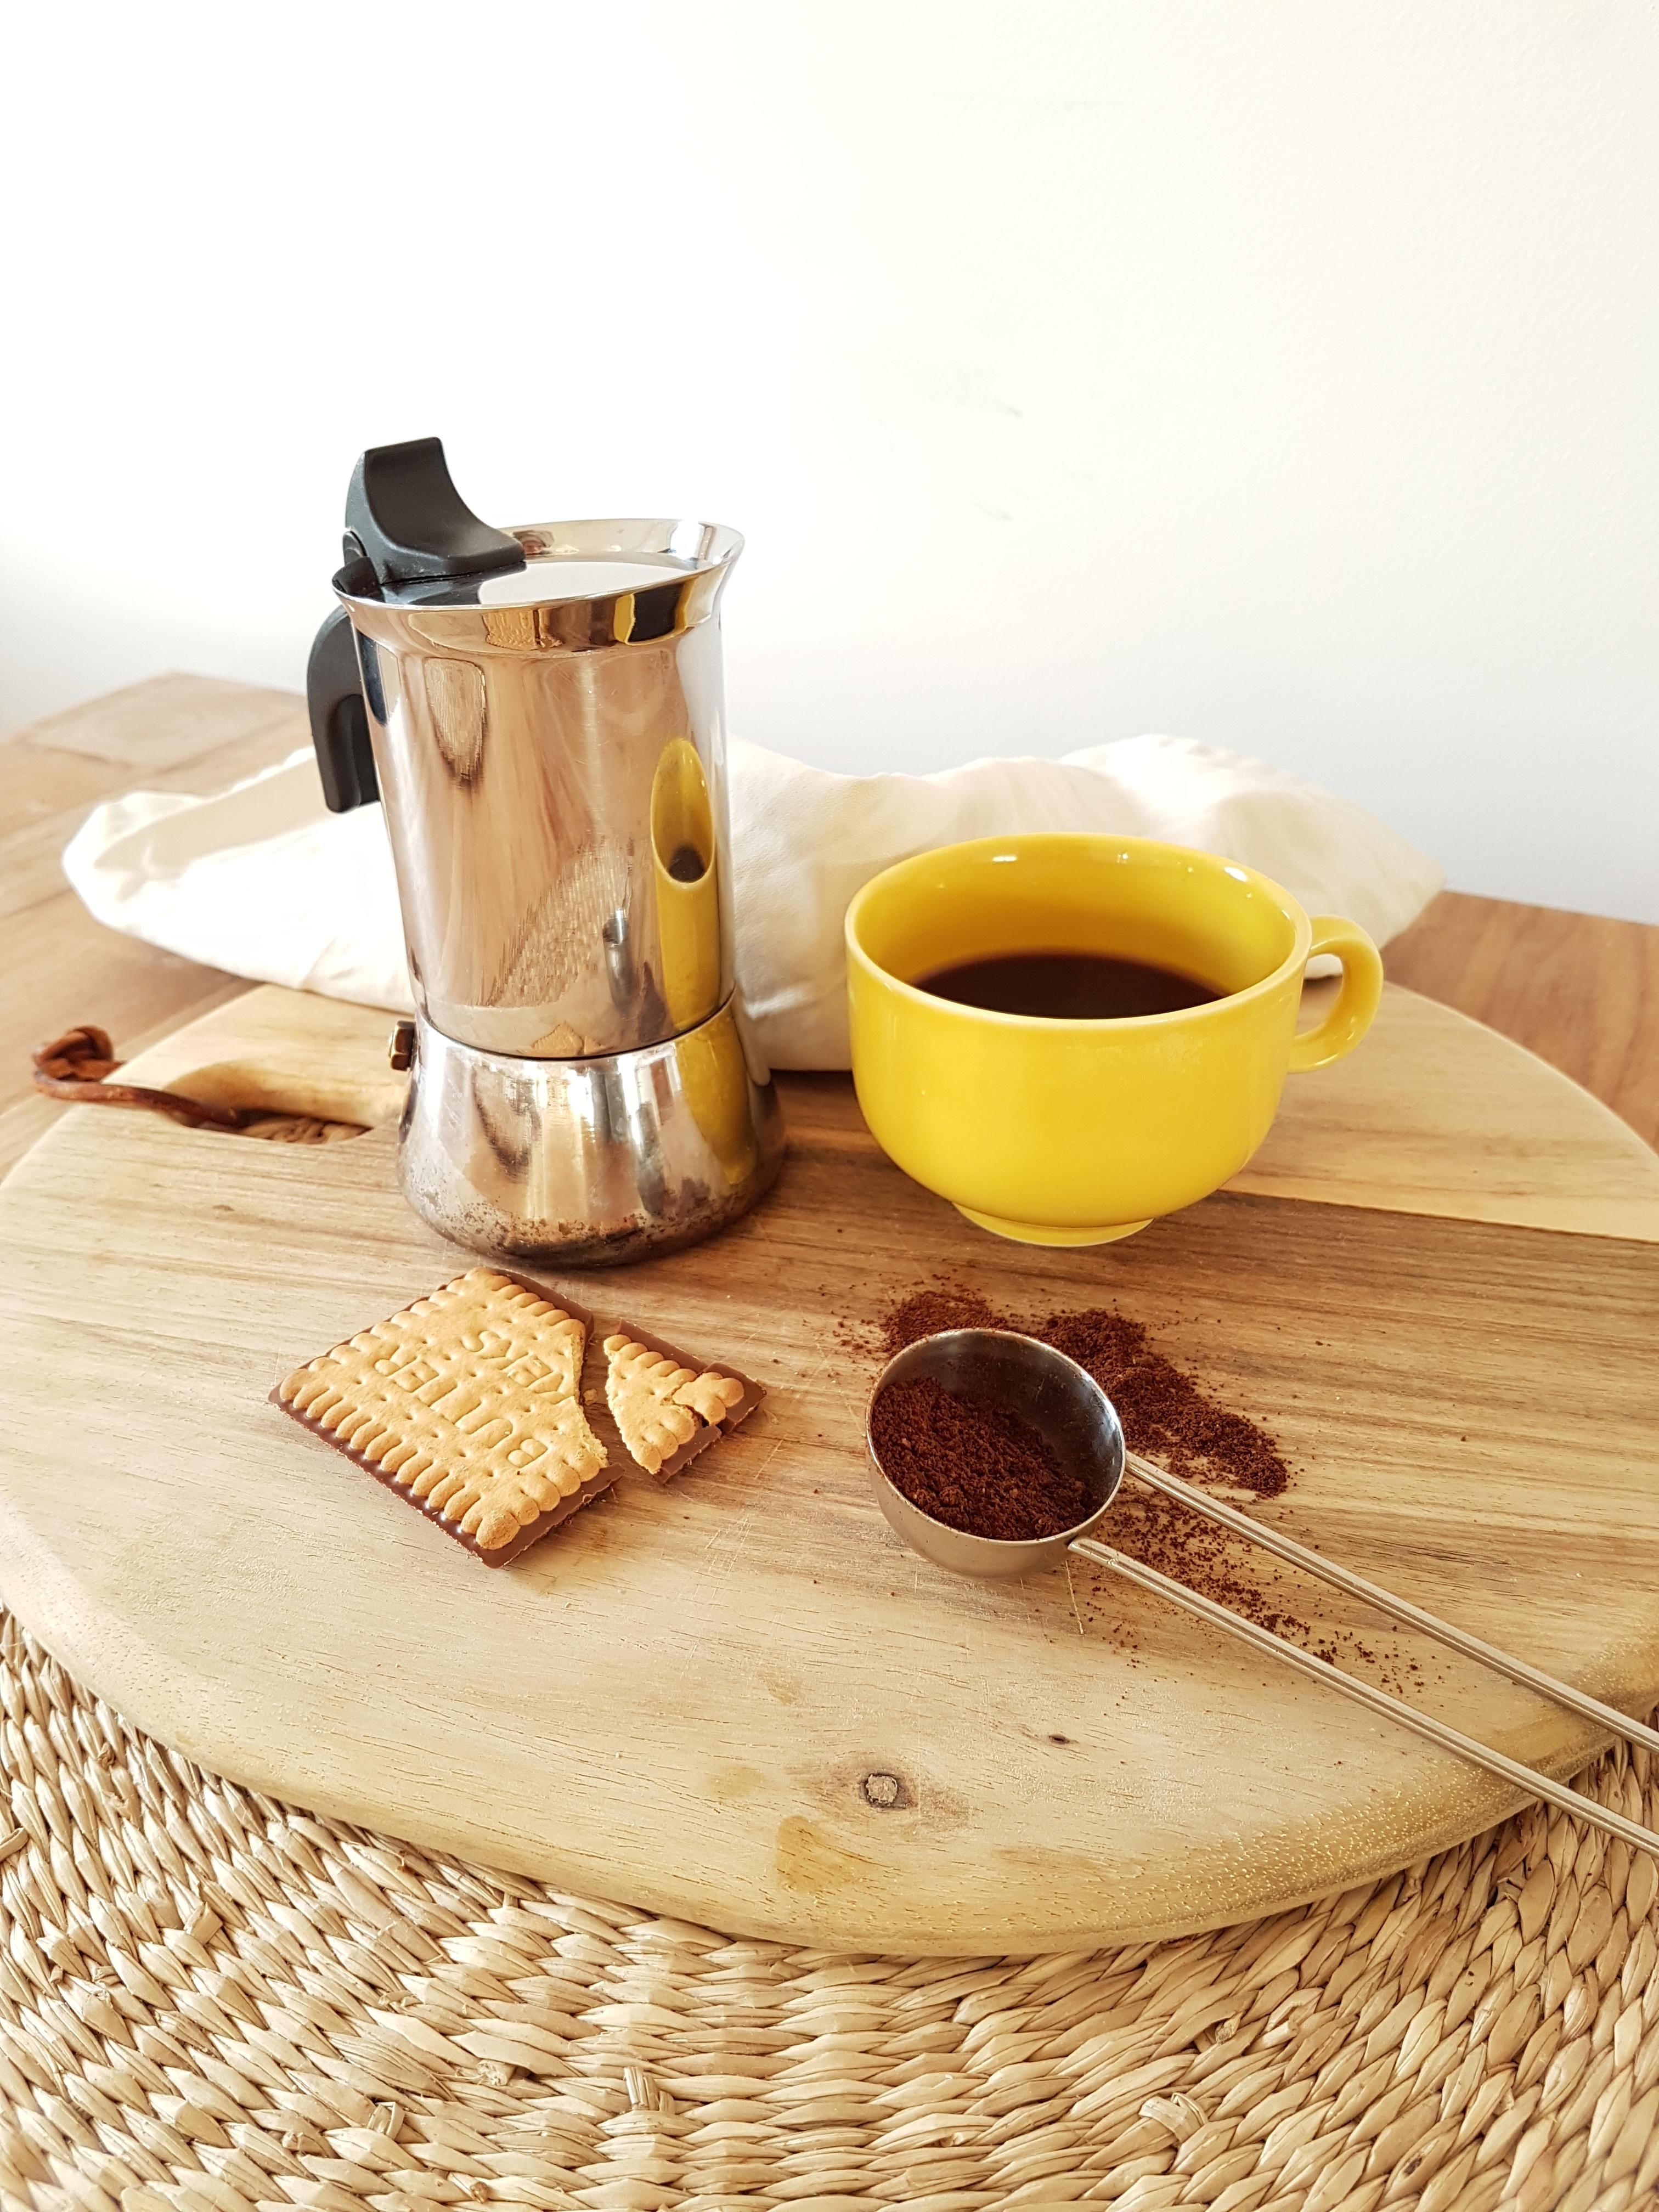 But first, coffee ❤ #coffeelover #foodchallenge #kaffee 